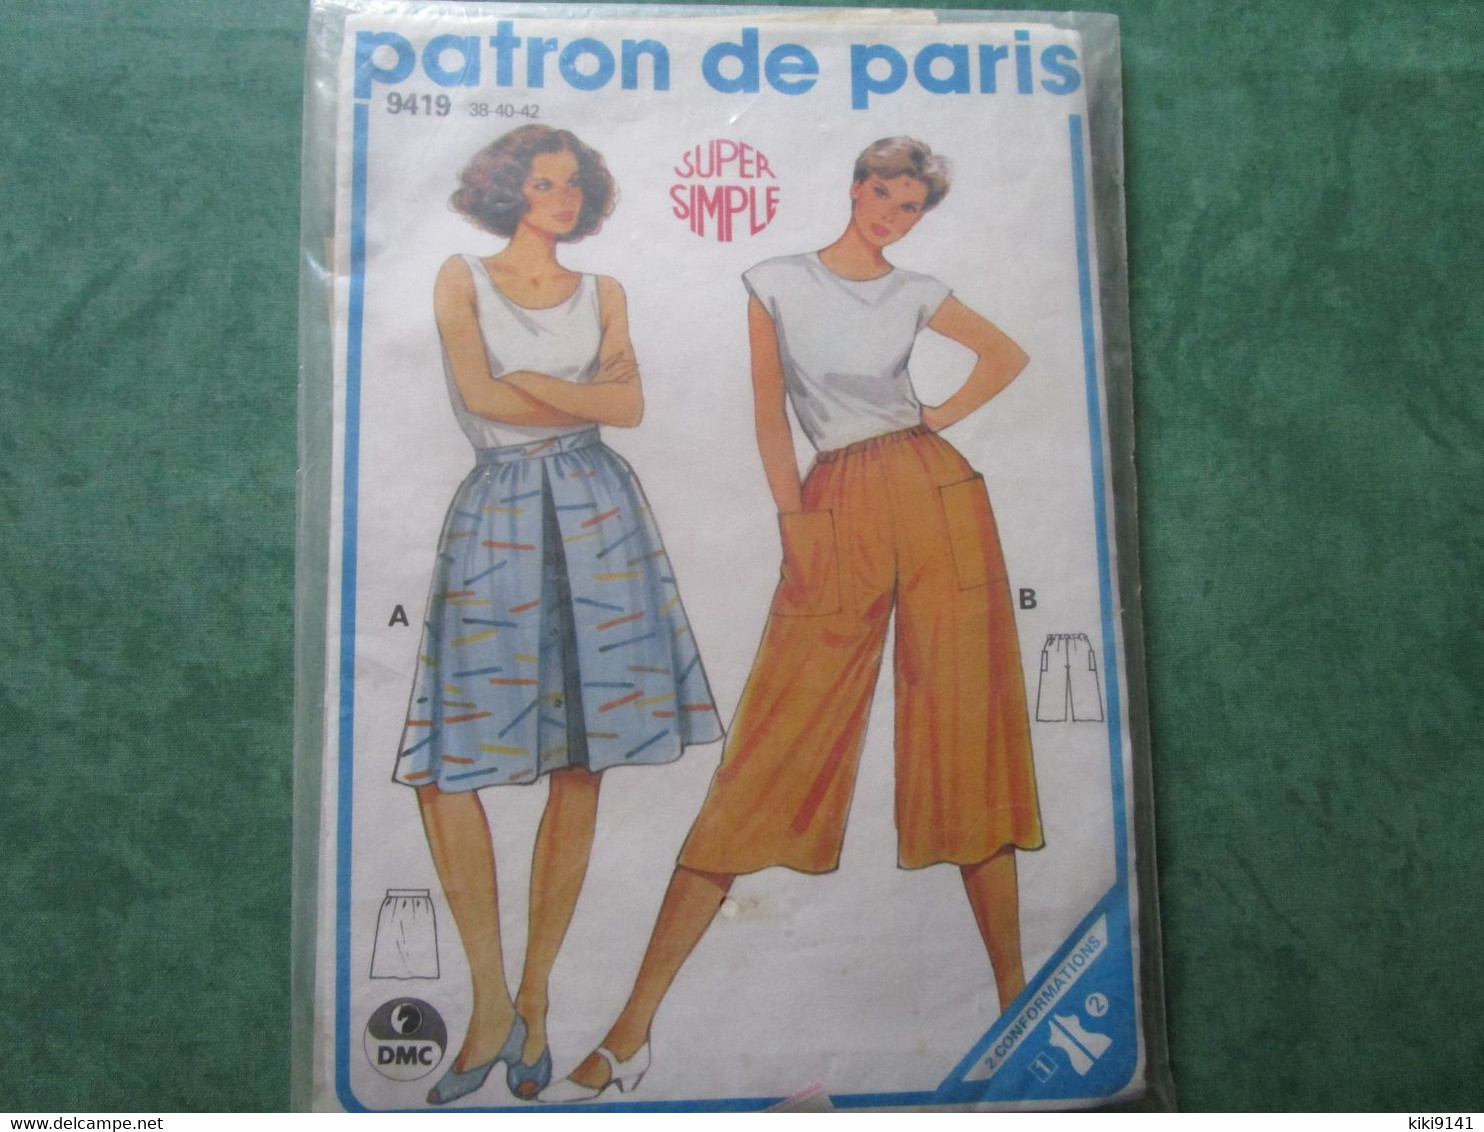 PATRON DE PARIS 9419 - 38-40-42 - Super Simple - Schnittmuster